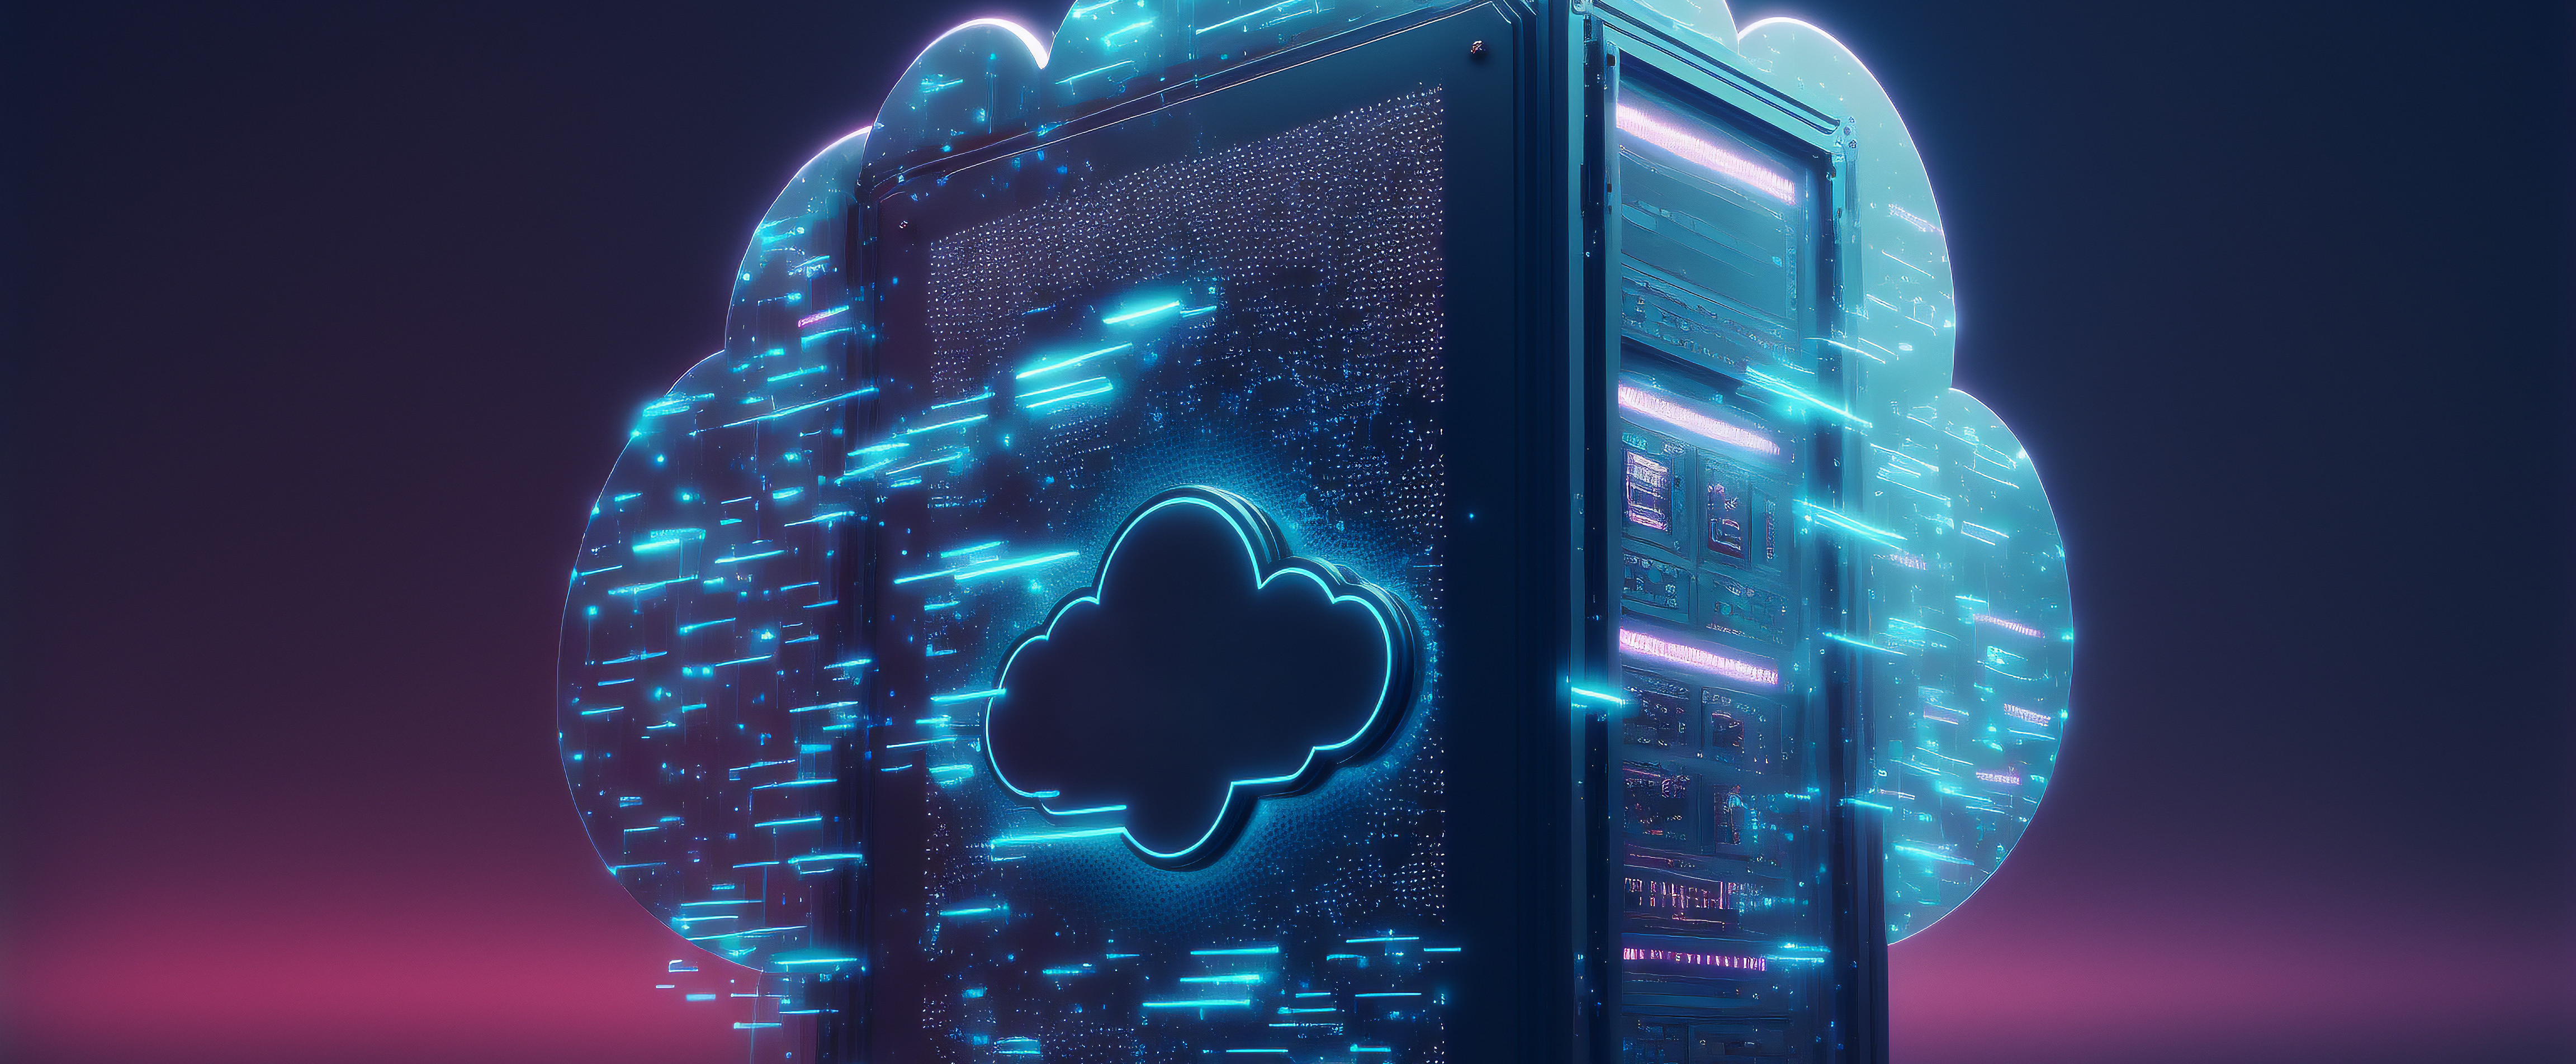 Online Cloud Data Storage Concept Cloudscape Digital Online Server For Global Network Business Web Database Backup Computer Private Infrastructure Technology